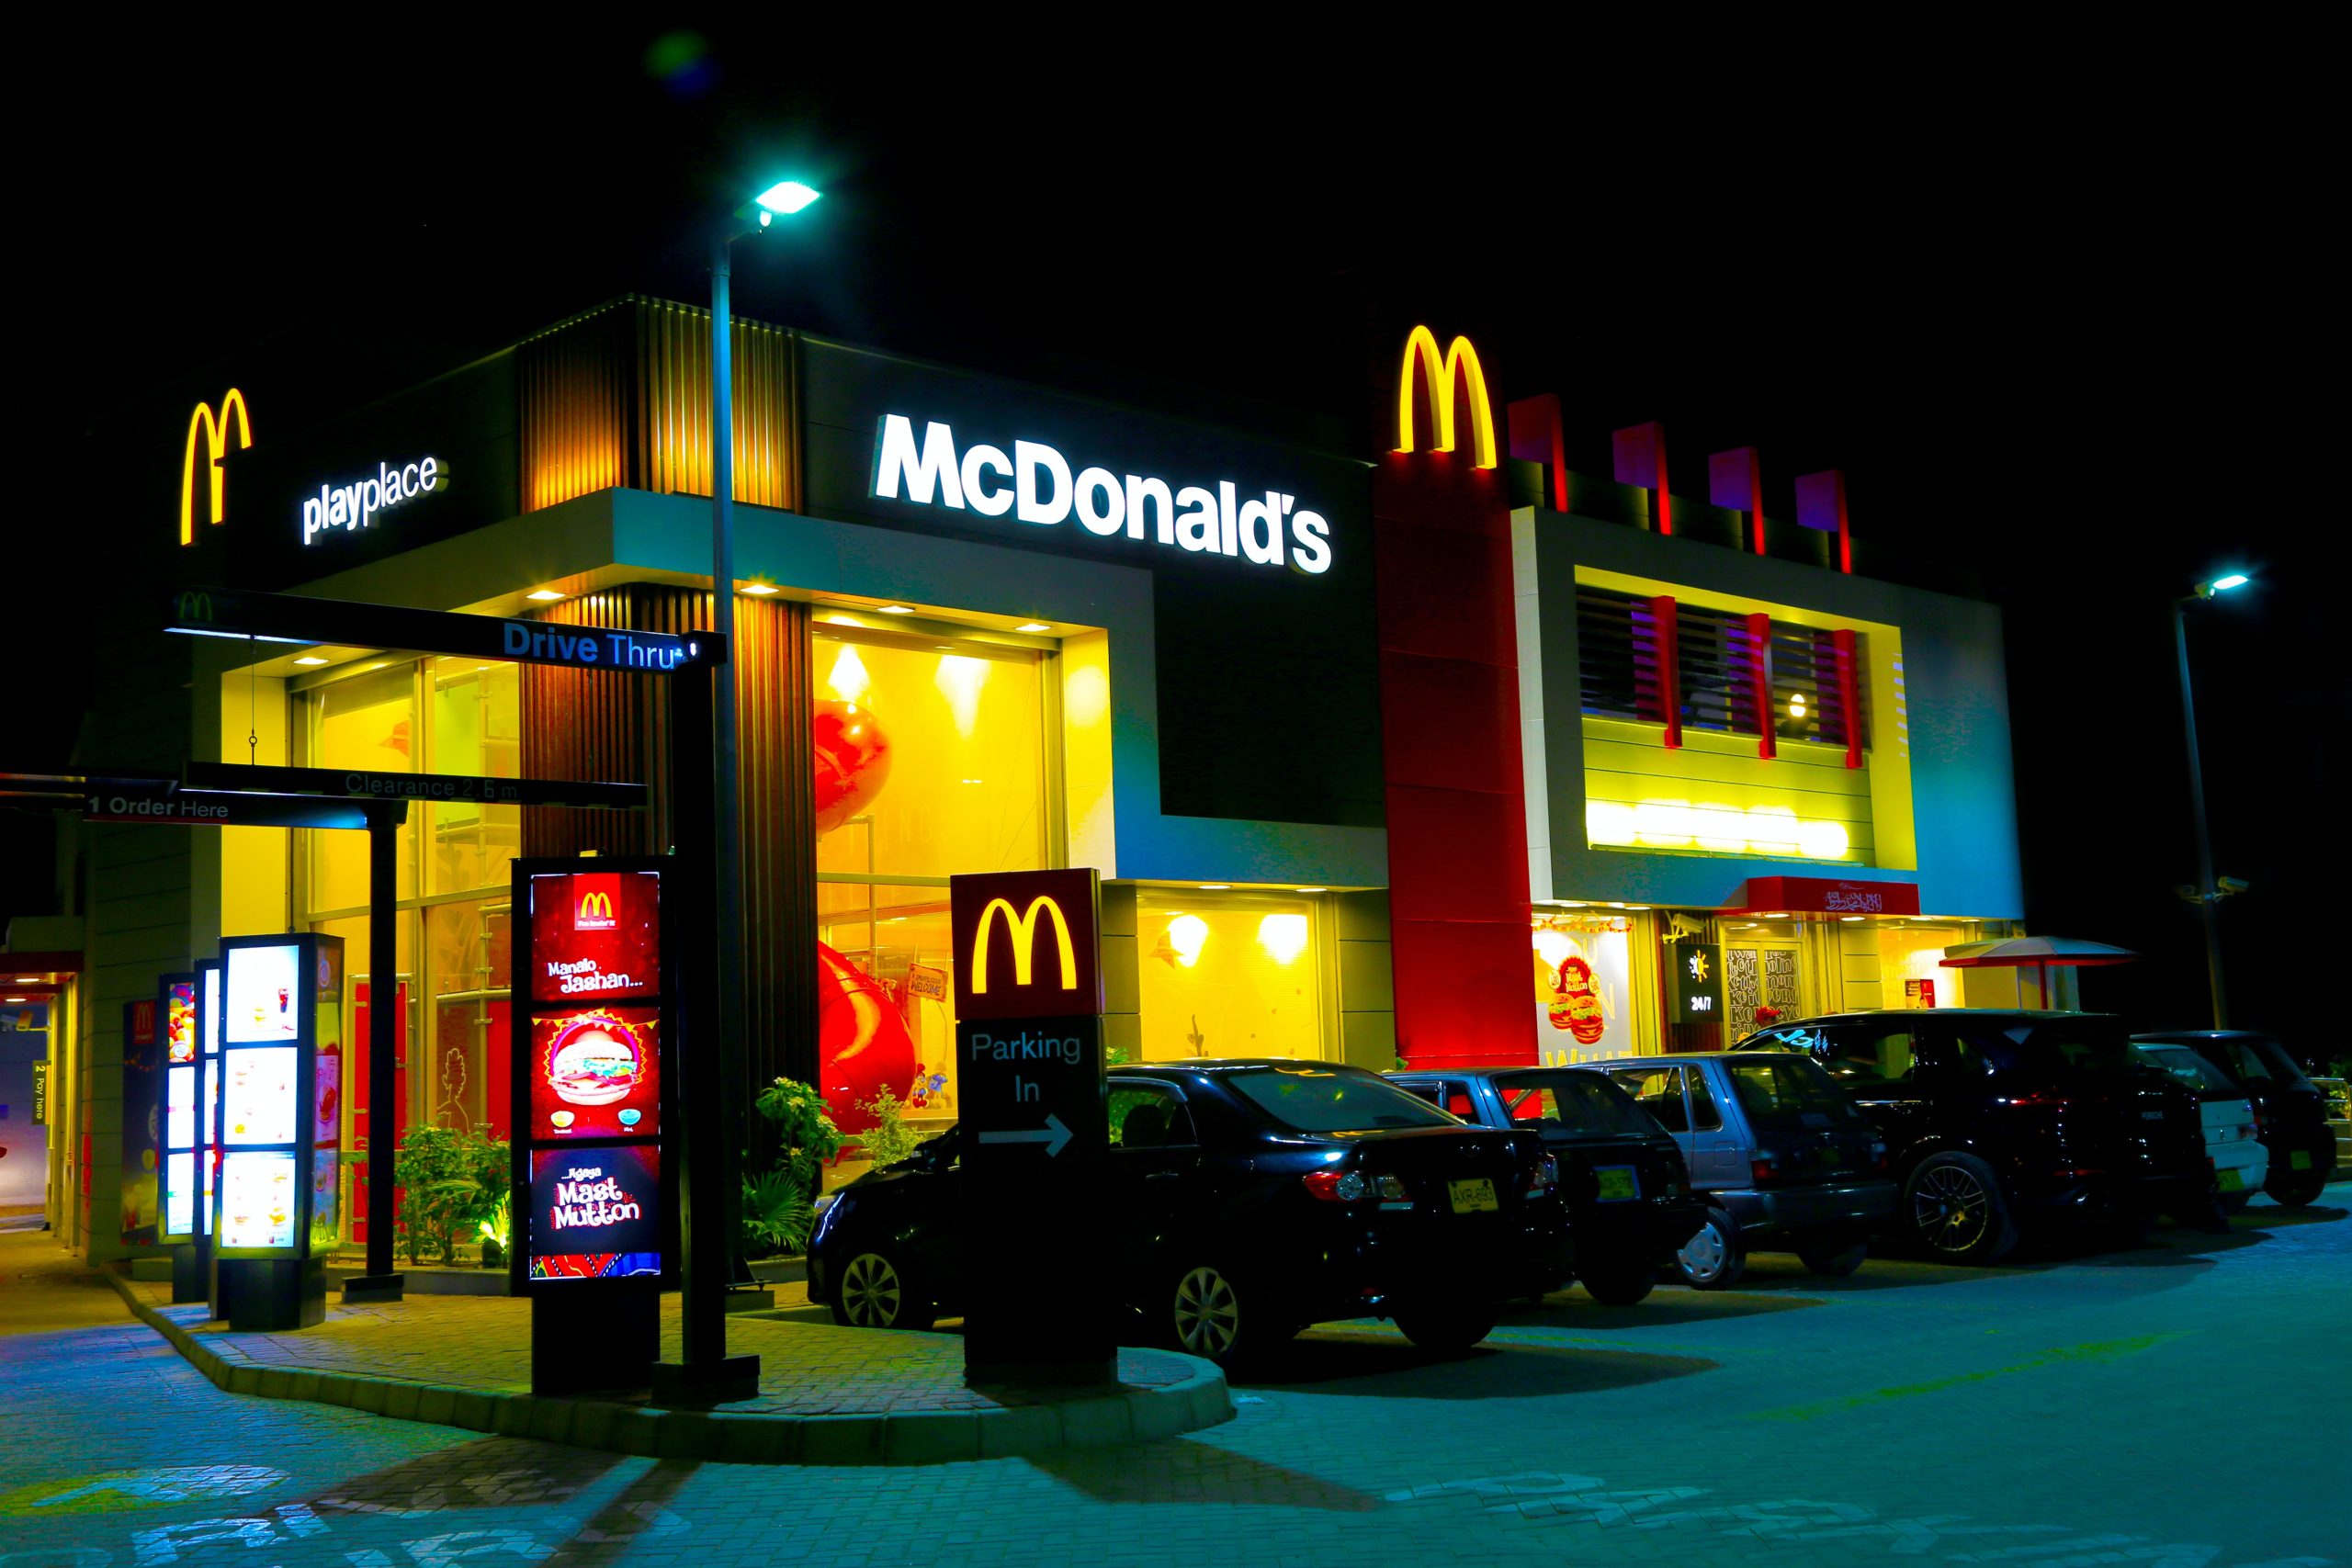 Apostlarna byggde inte som McDonald’s